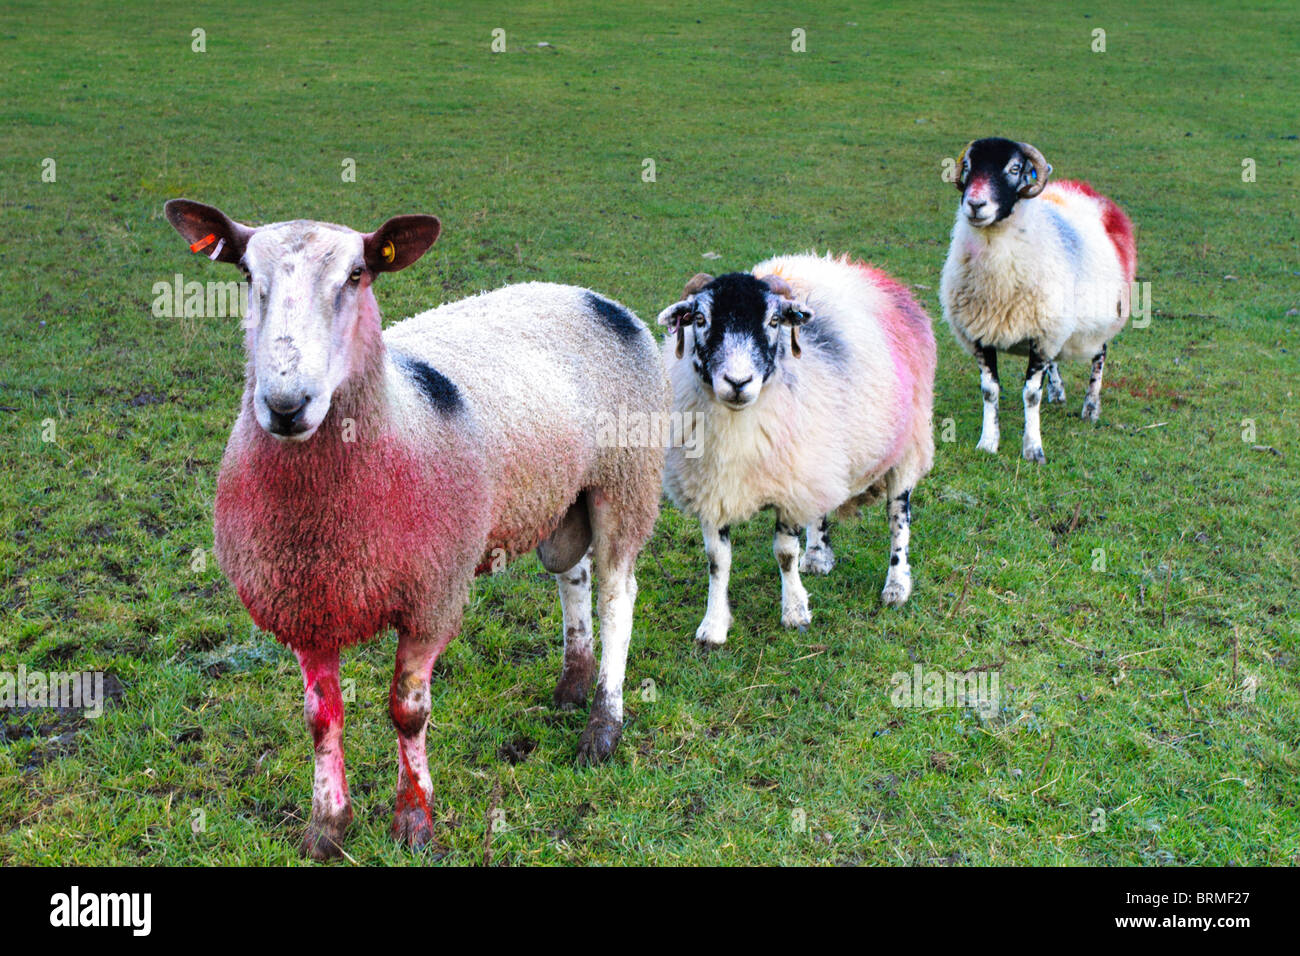 Three sheep in field during mating season Stock Photo